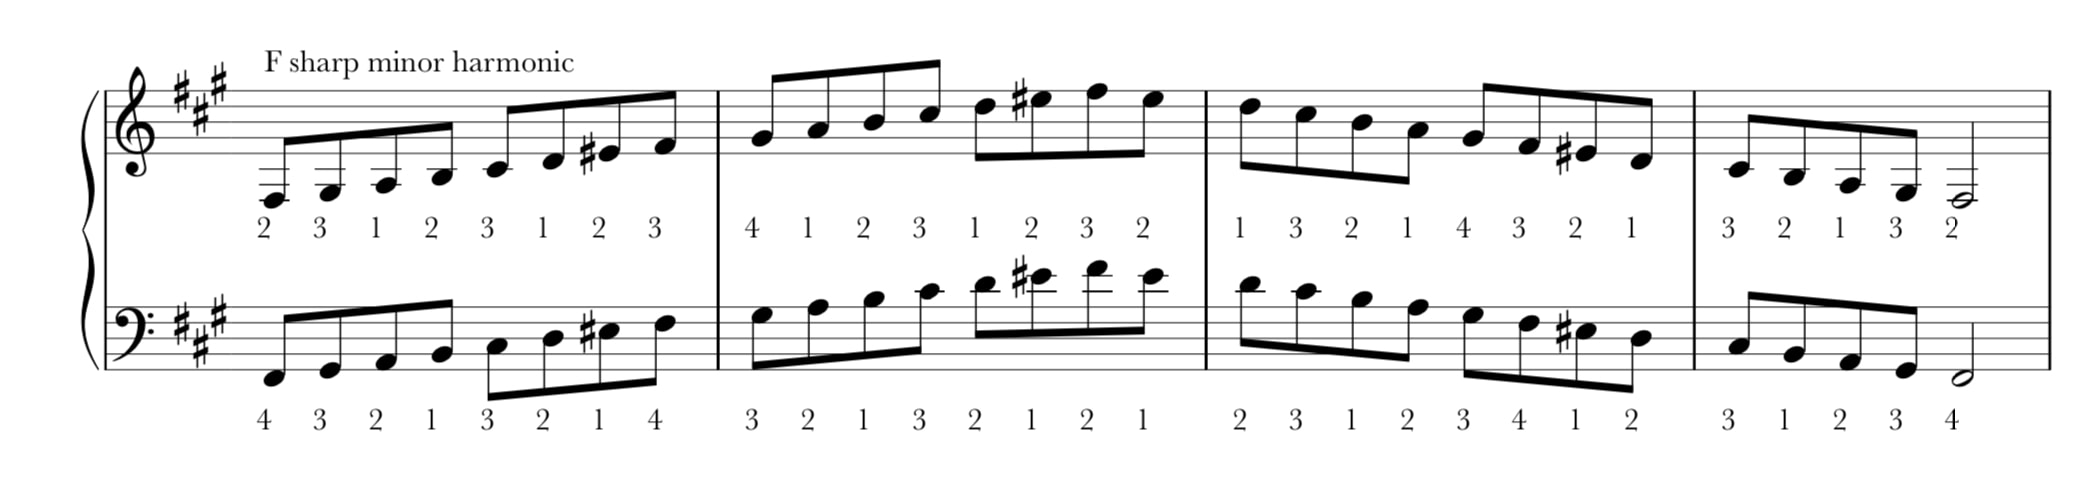 F sharp harmonic minor scale